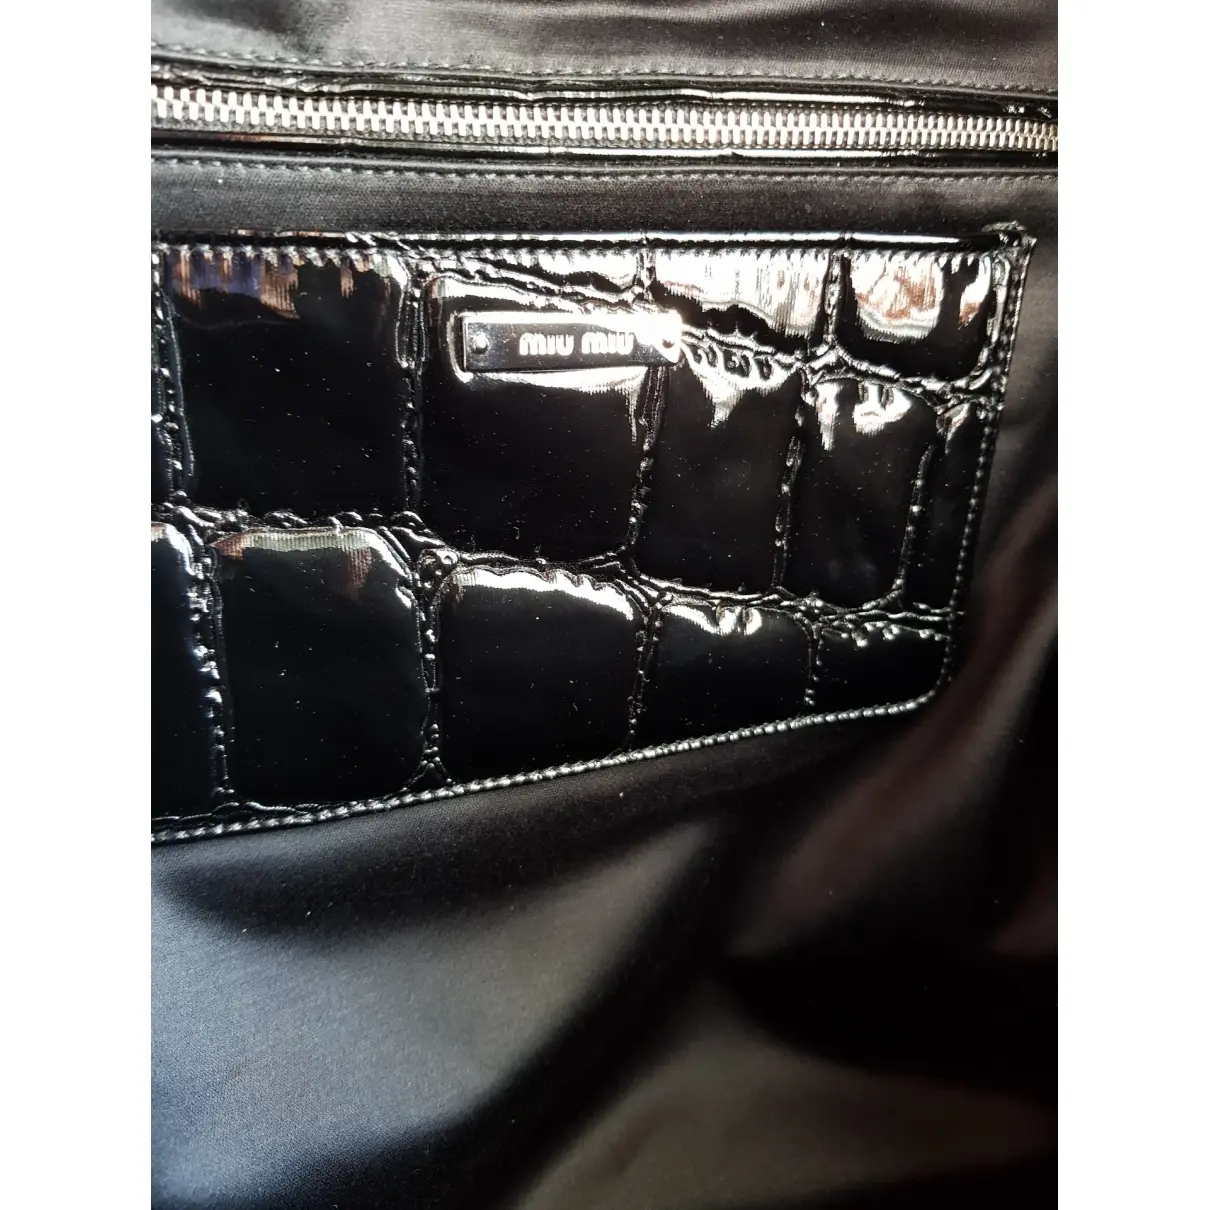 Buy Miu Miu Patent leather backpack online